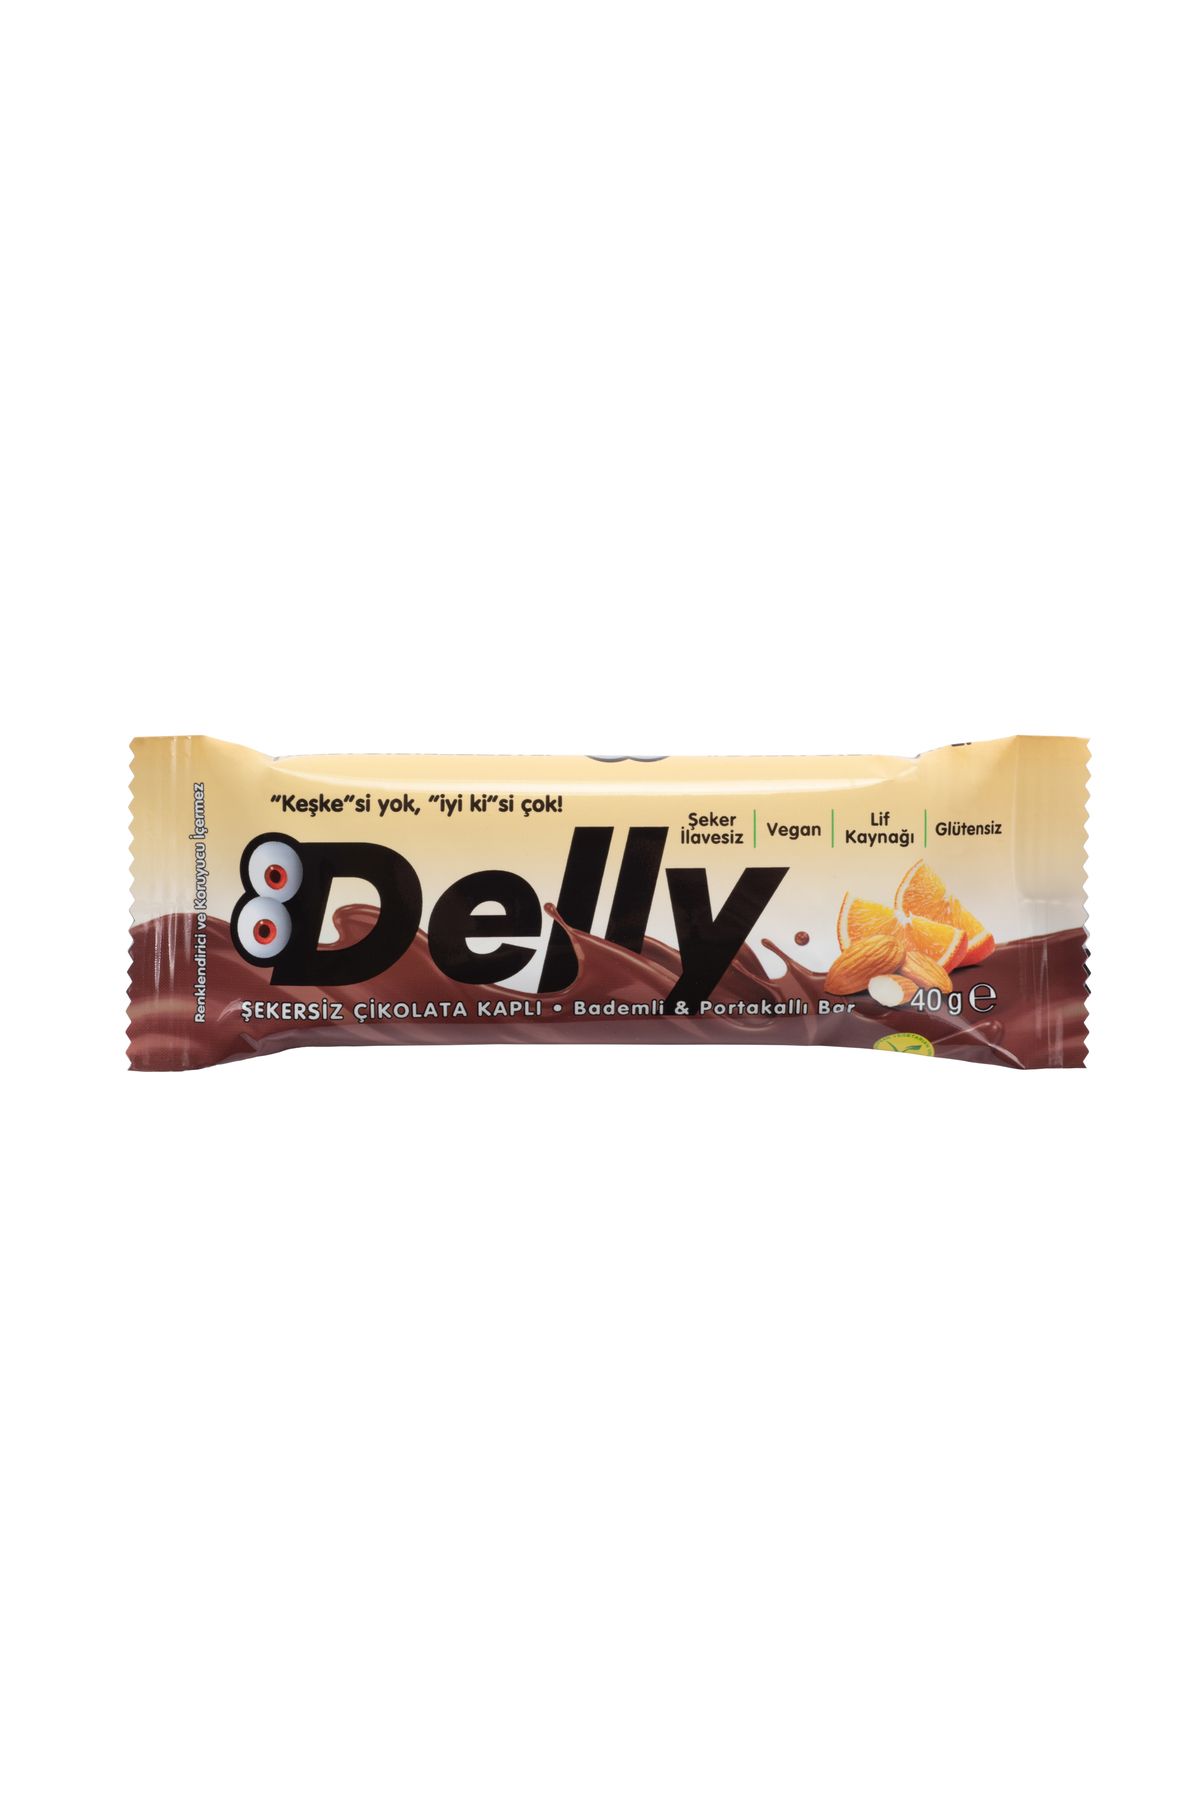 Delly Şeker Ilavesiz Çikolata Kaplı - Bademli & Portakallı Bar 40g (12 ADET)